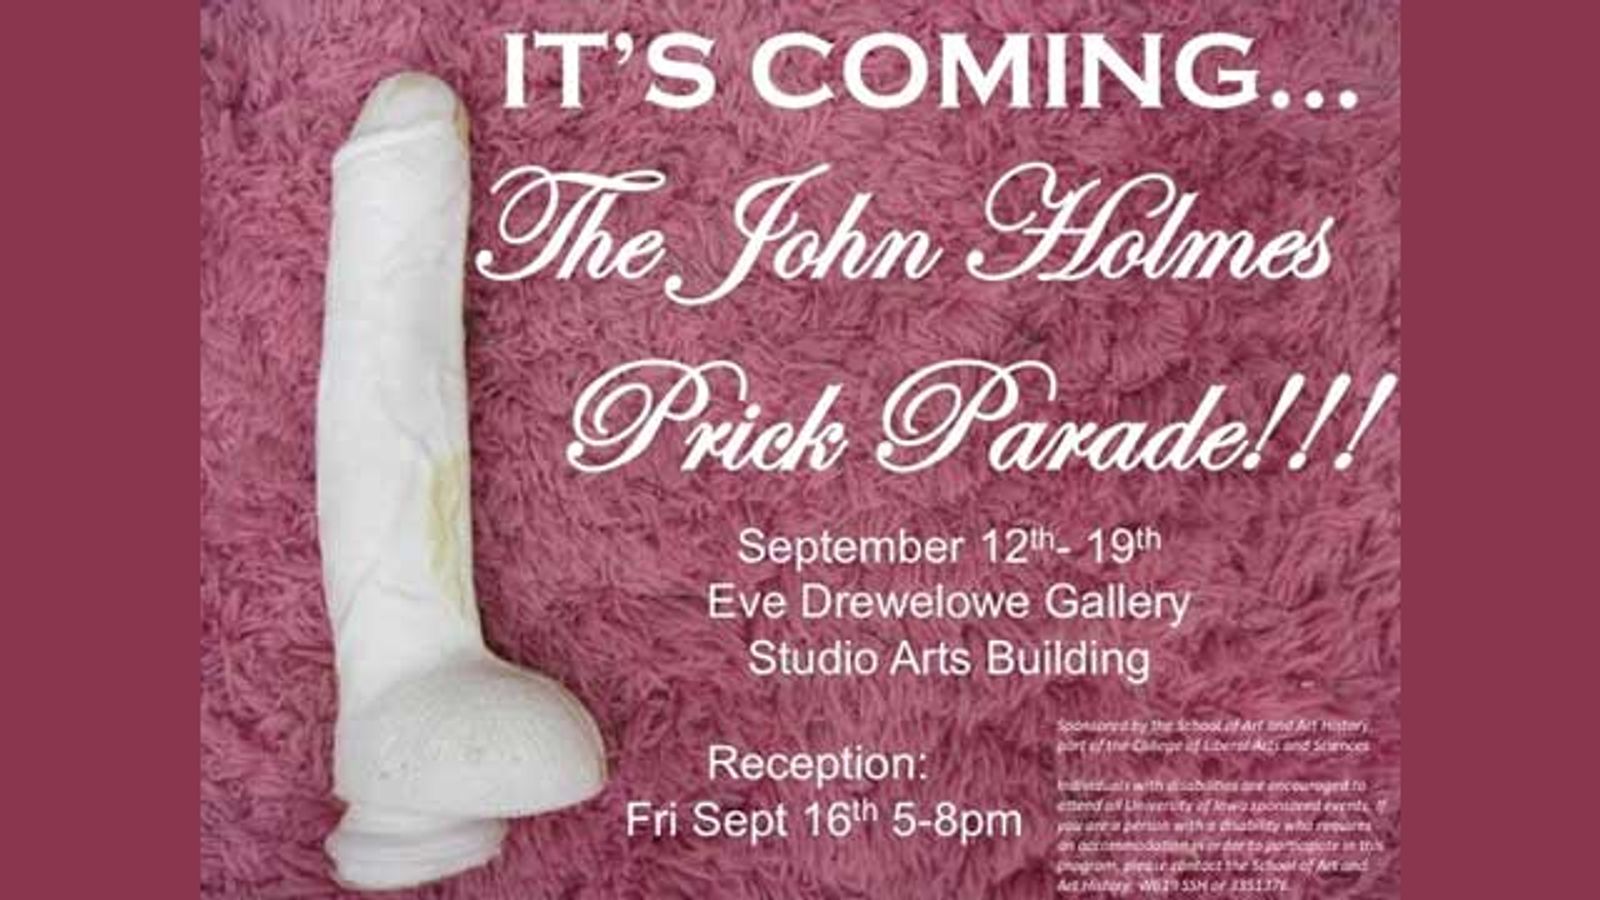 University of Iowa Art Exhibit Features John Holmes’ Prick